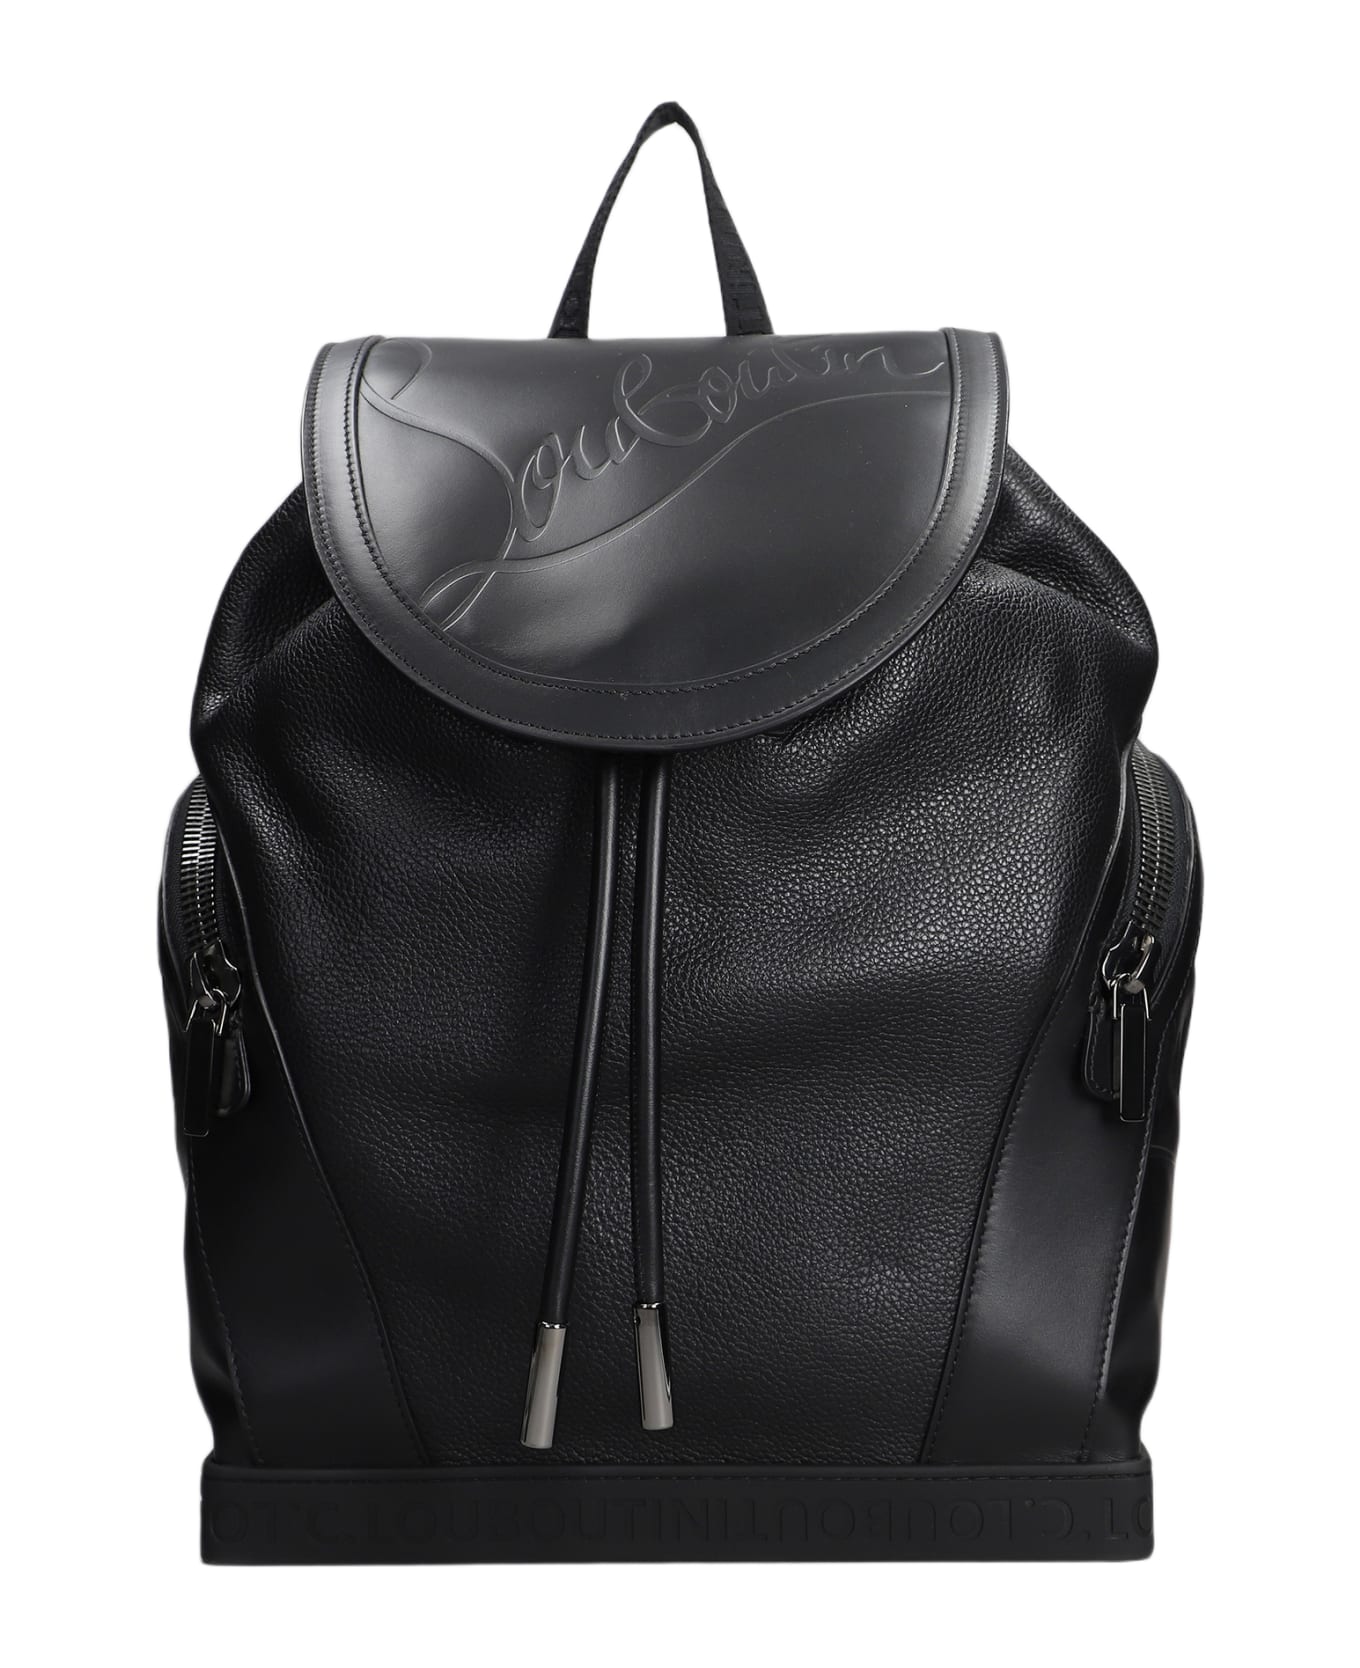 Christian Louboutin Explorafunk S Backpack In Black Leather - black